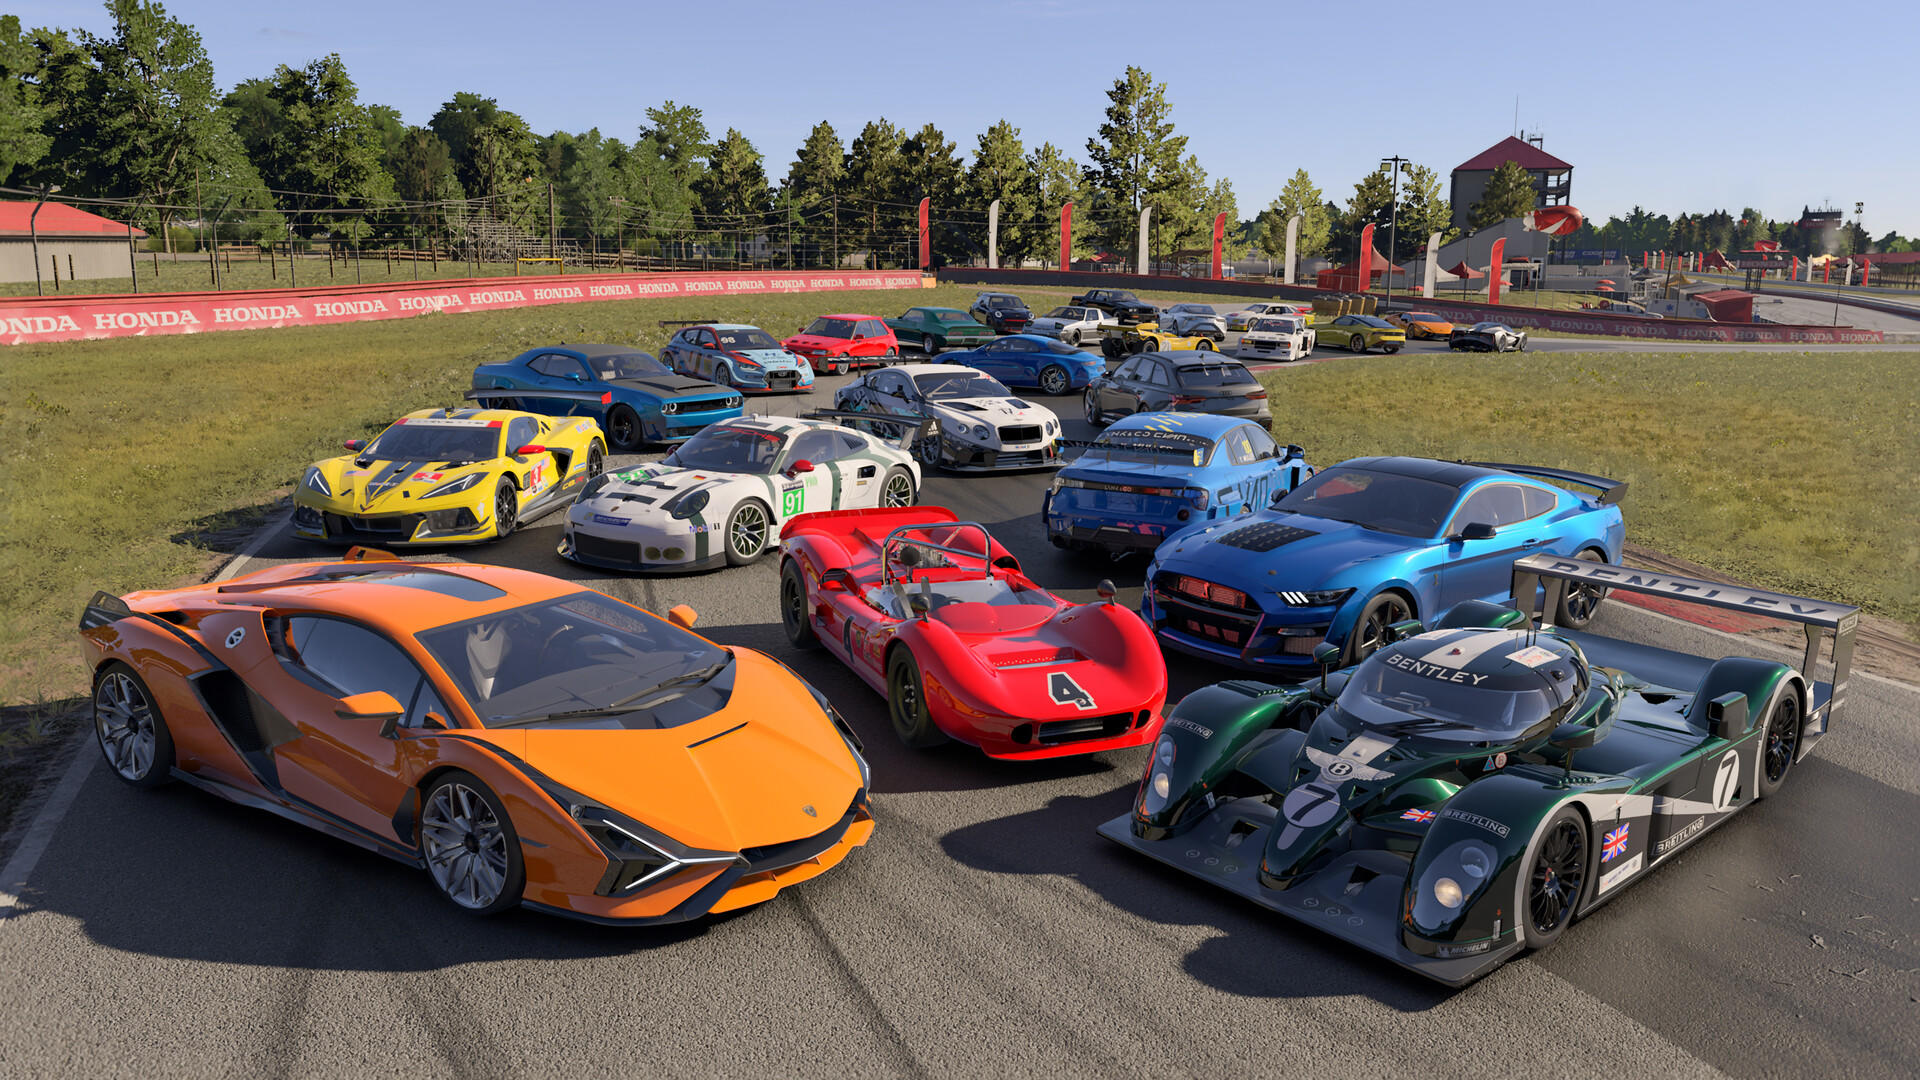 Forza Motorsport遊戲截圖